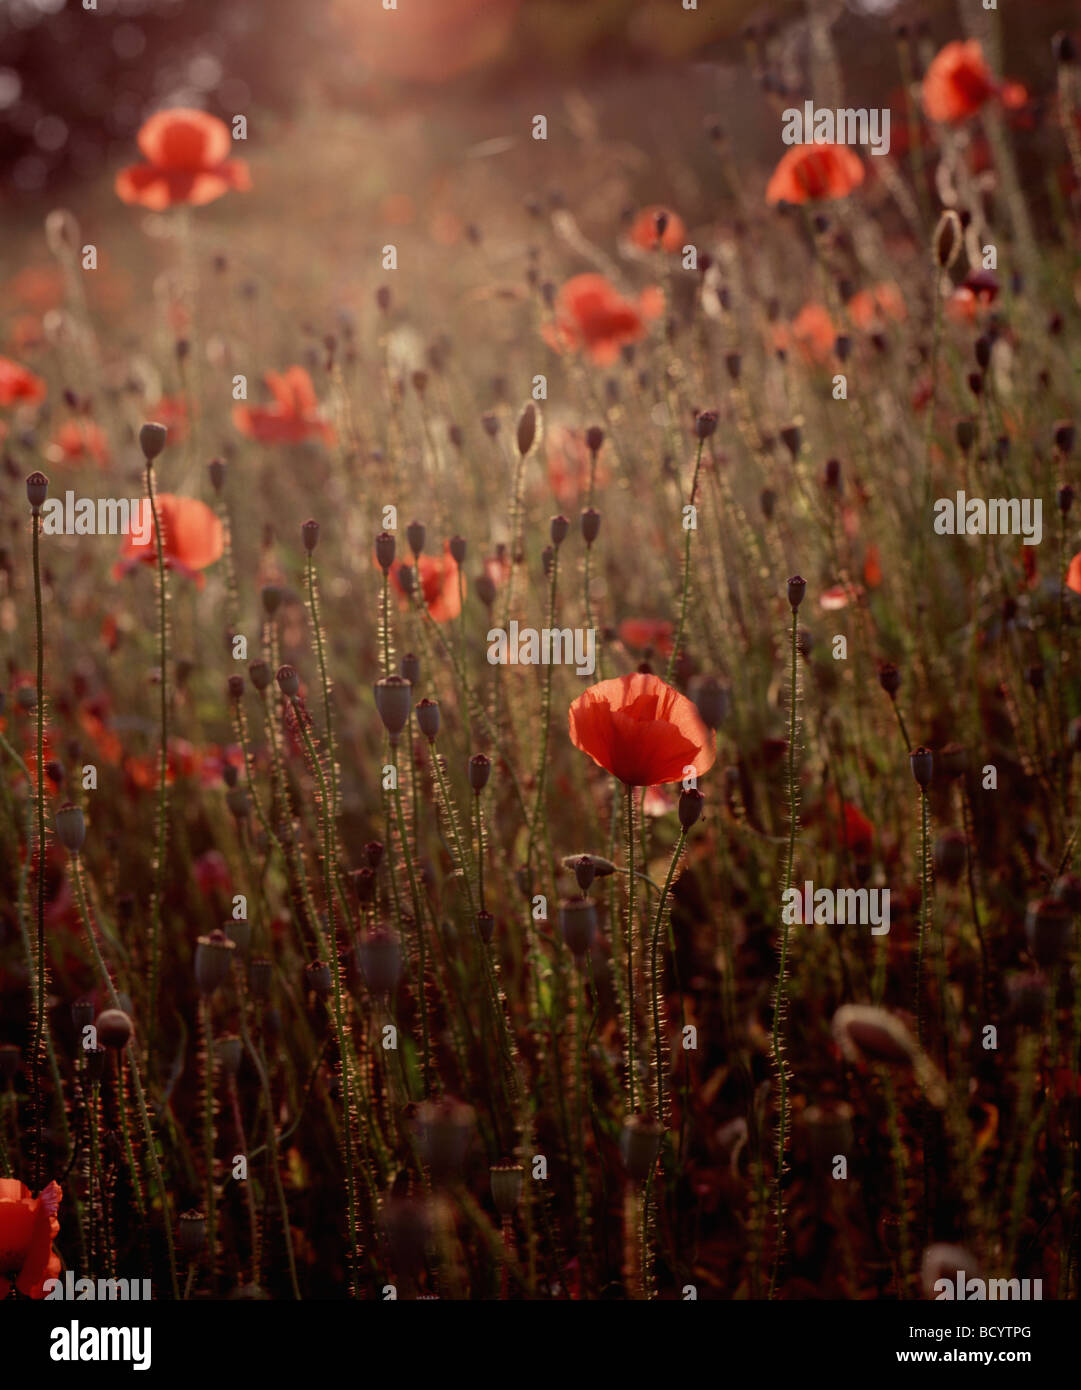 Field of poppies Stock Photo - Alamy